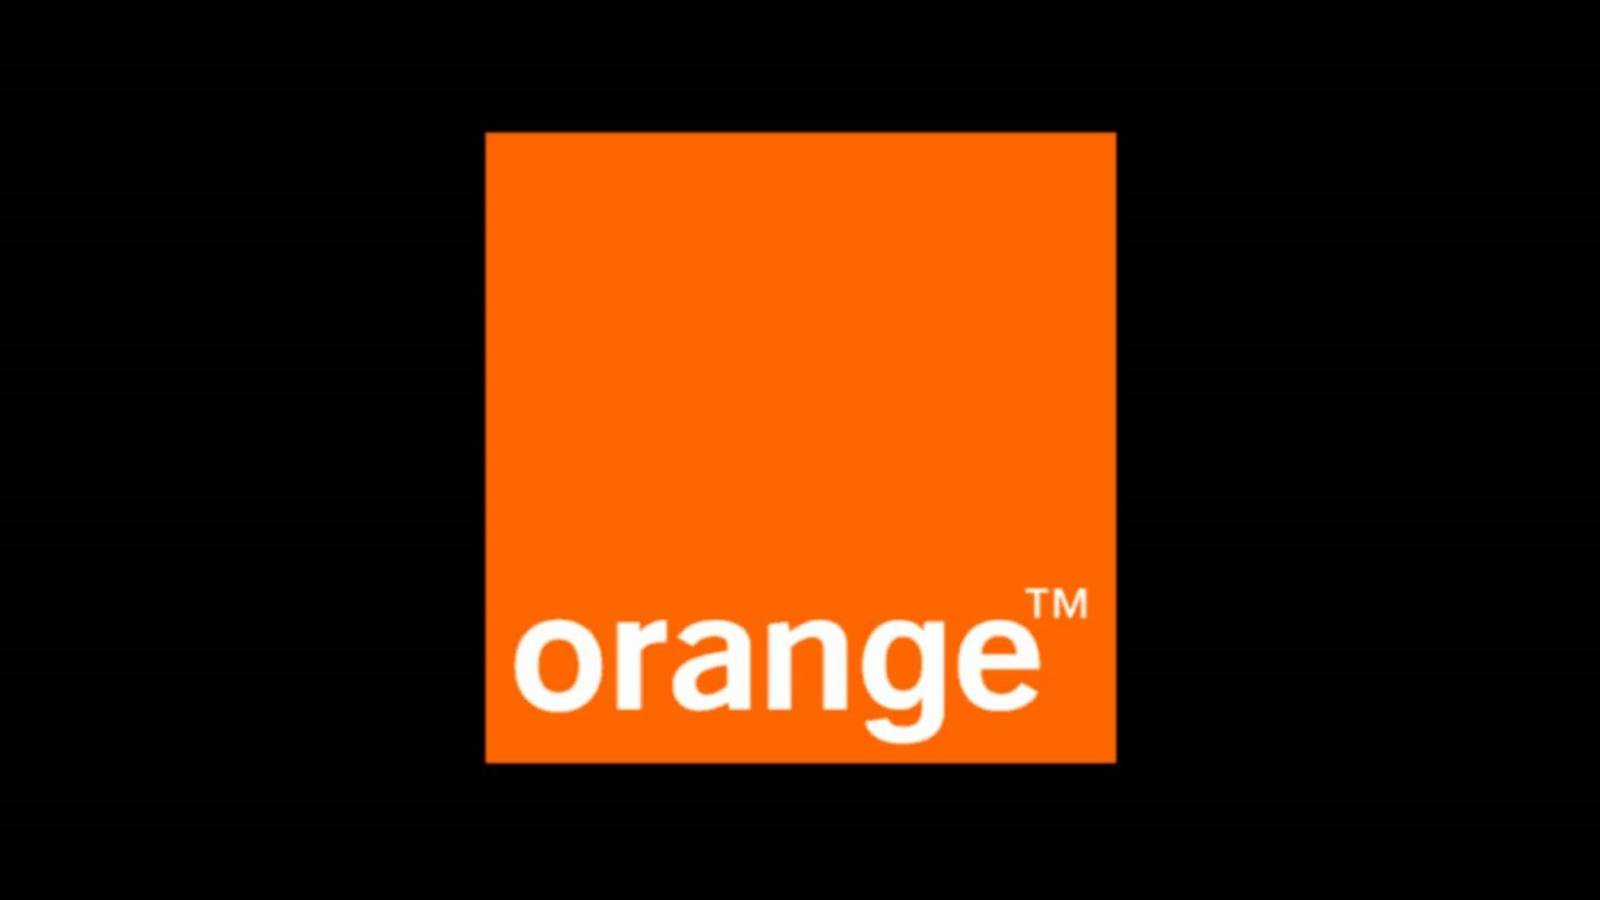 Standard orange